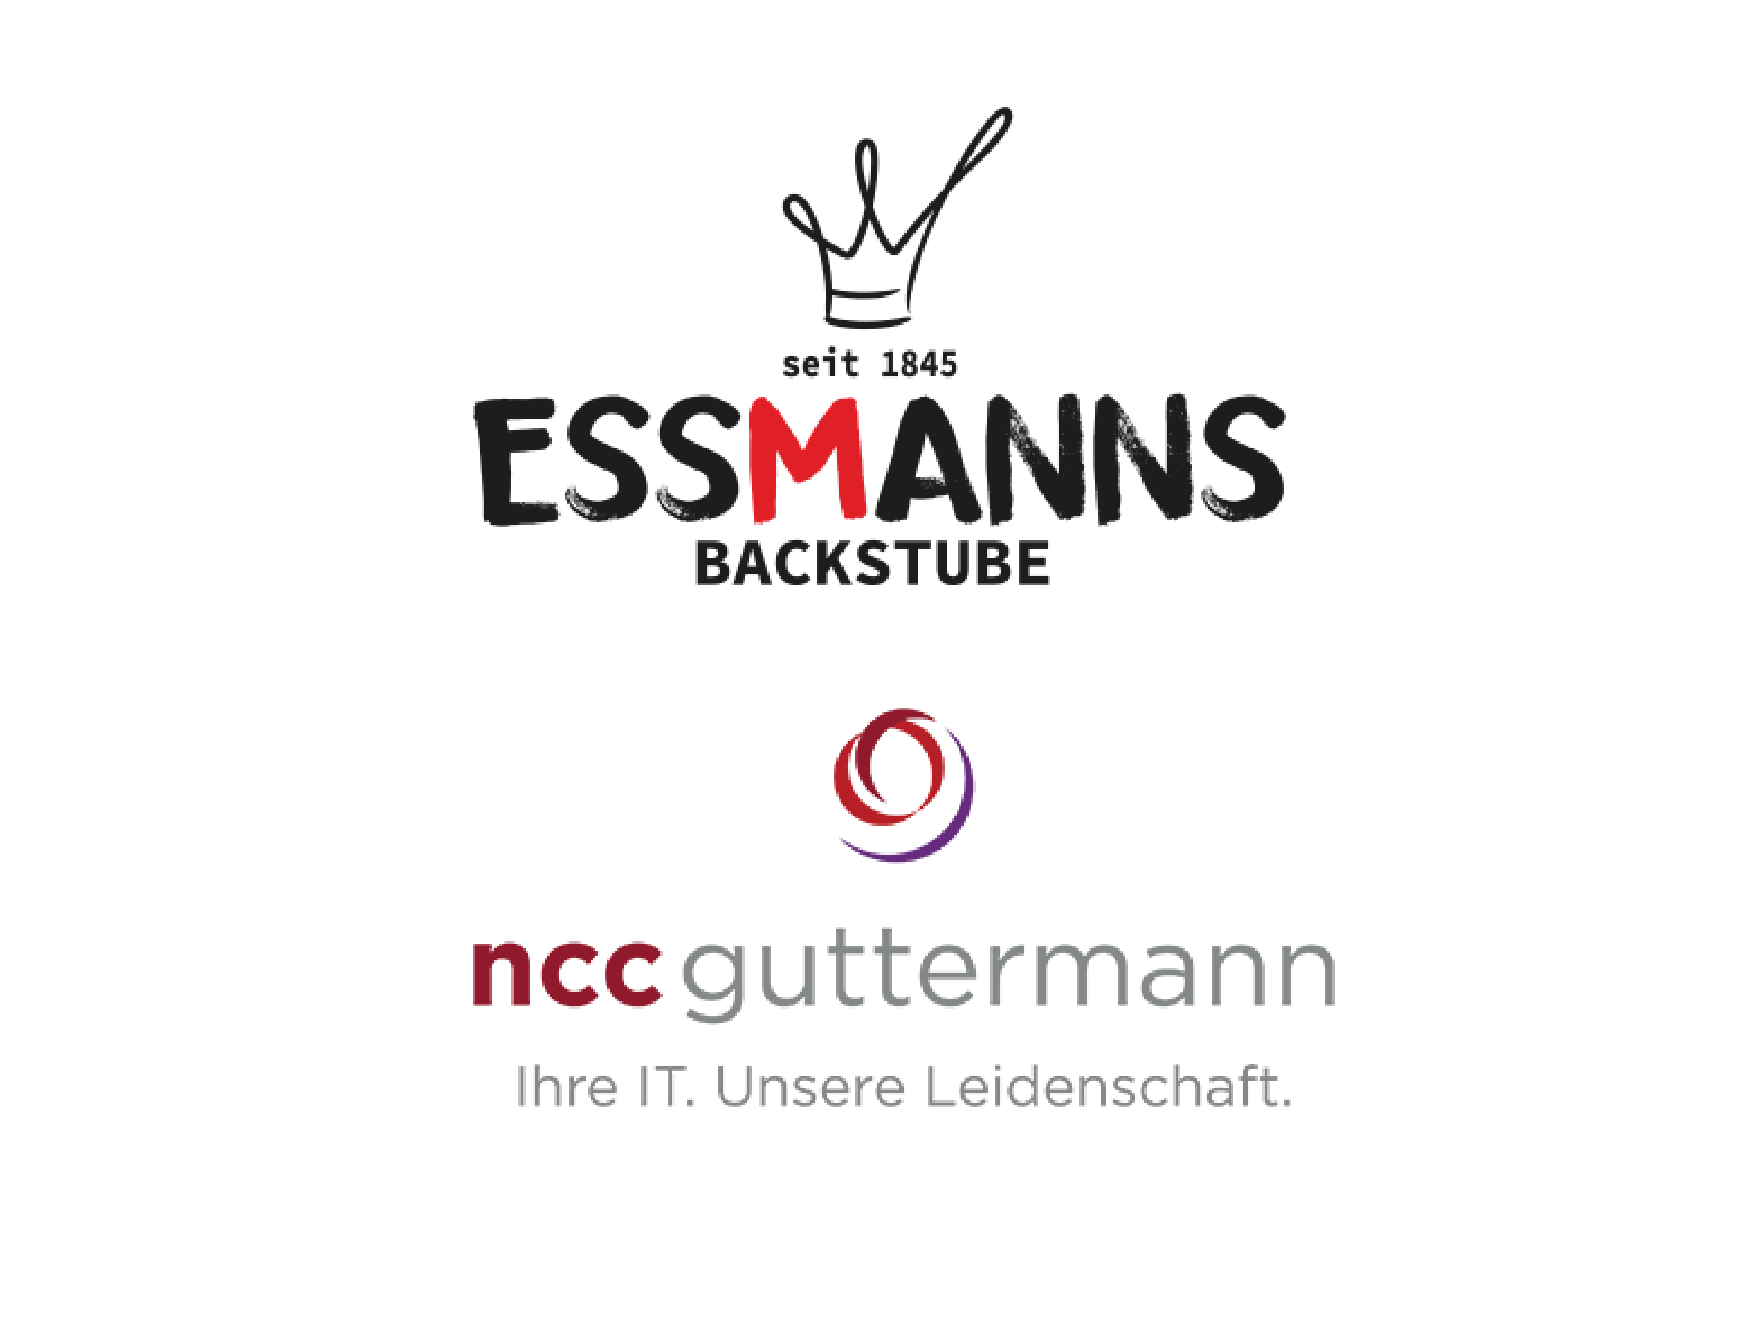 Essmann's Backstube  and NCC Guttermann logo